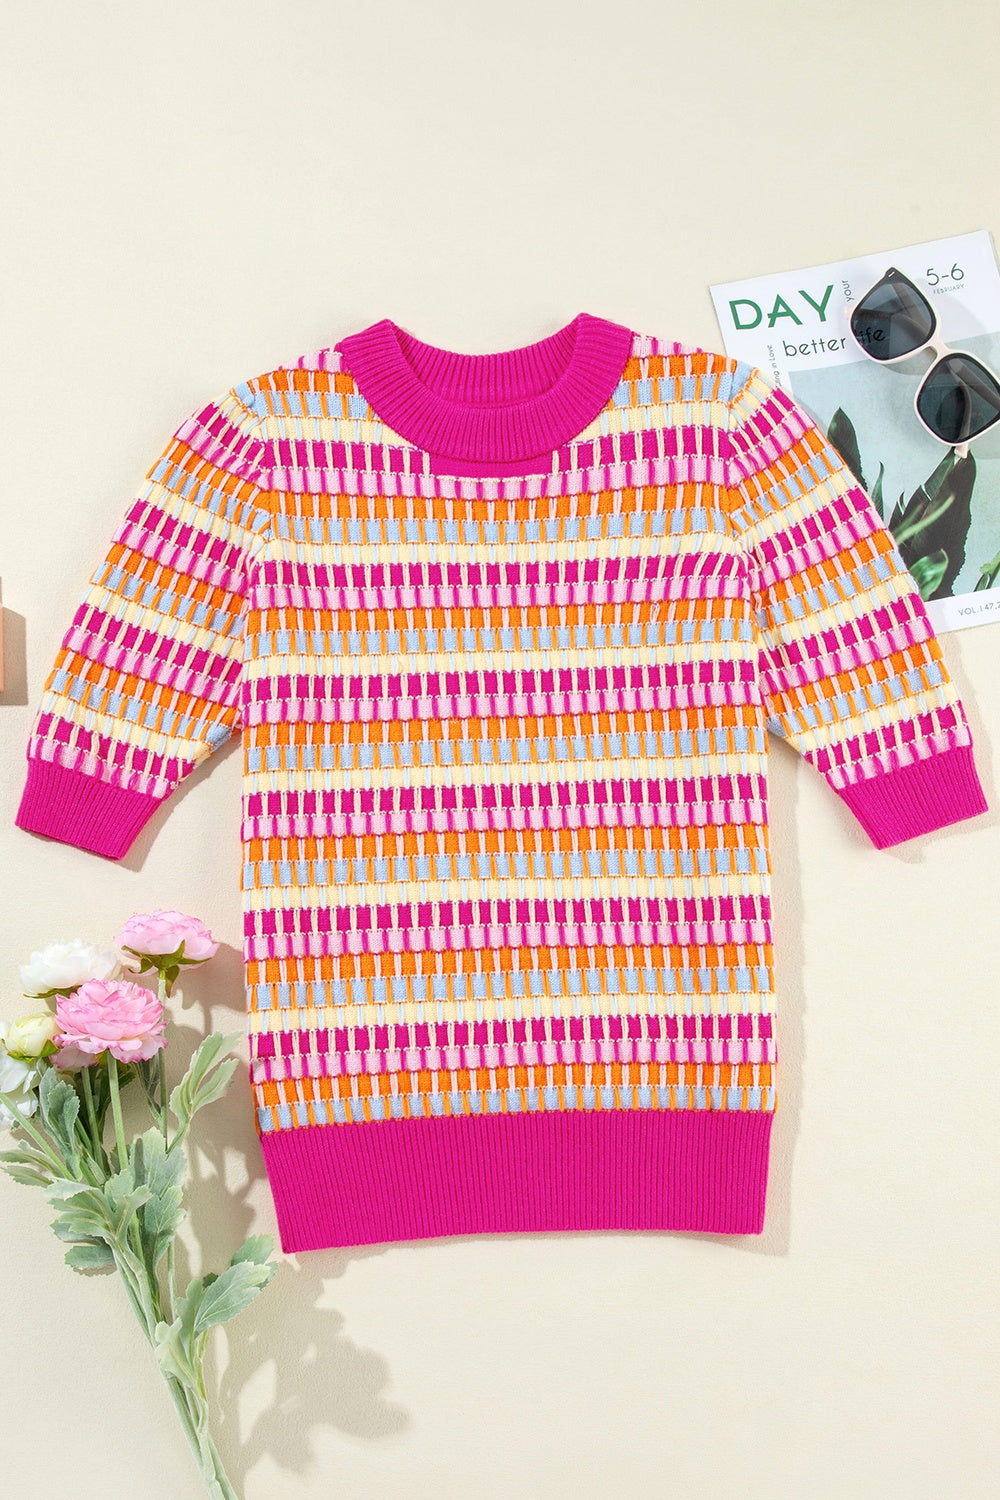 TEEK - Hot Pink Contrast Stitch Stripe Half Sleeve Knit Top TOPS TEEK Trend S  